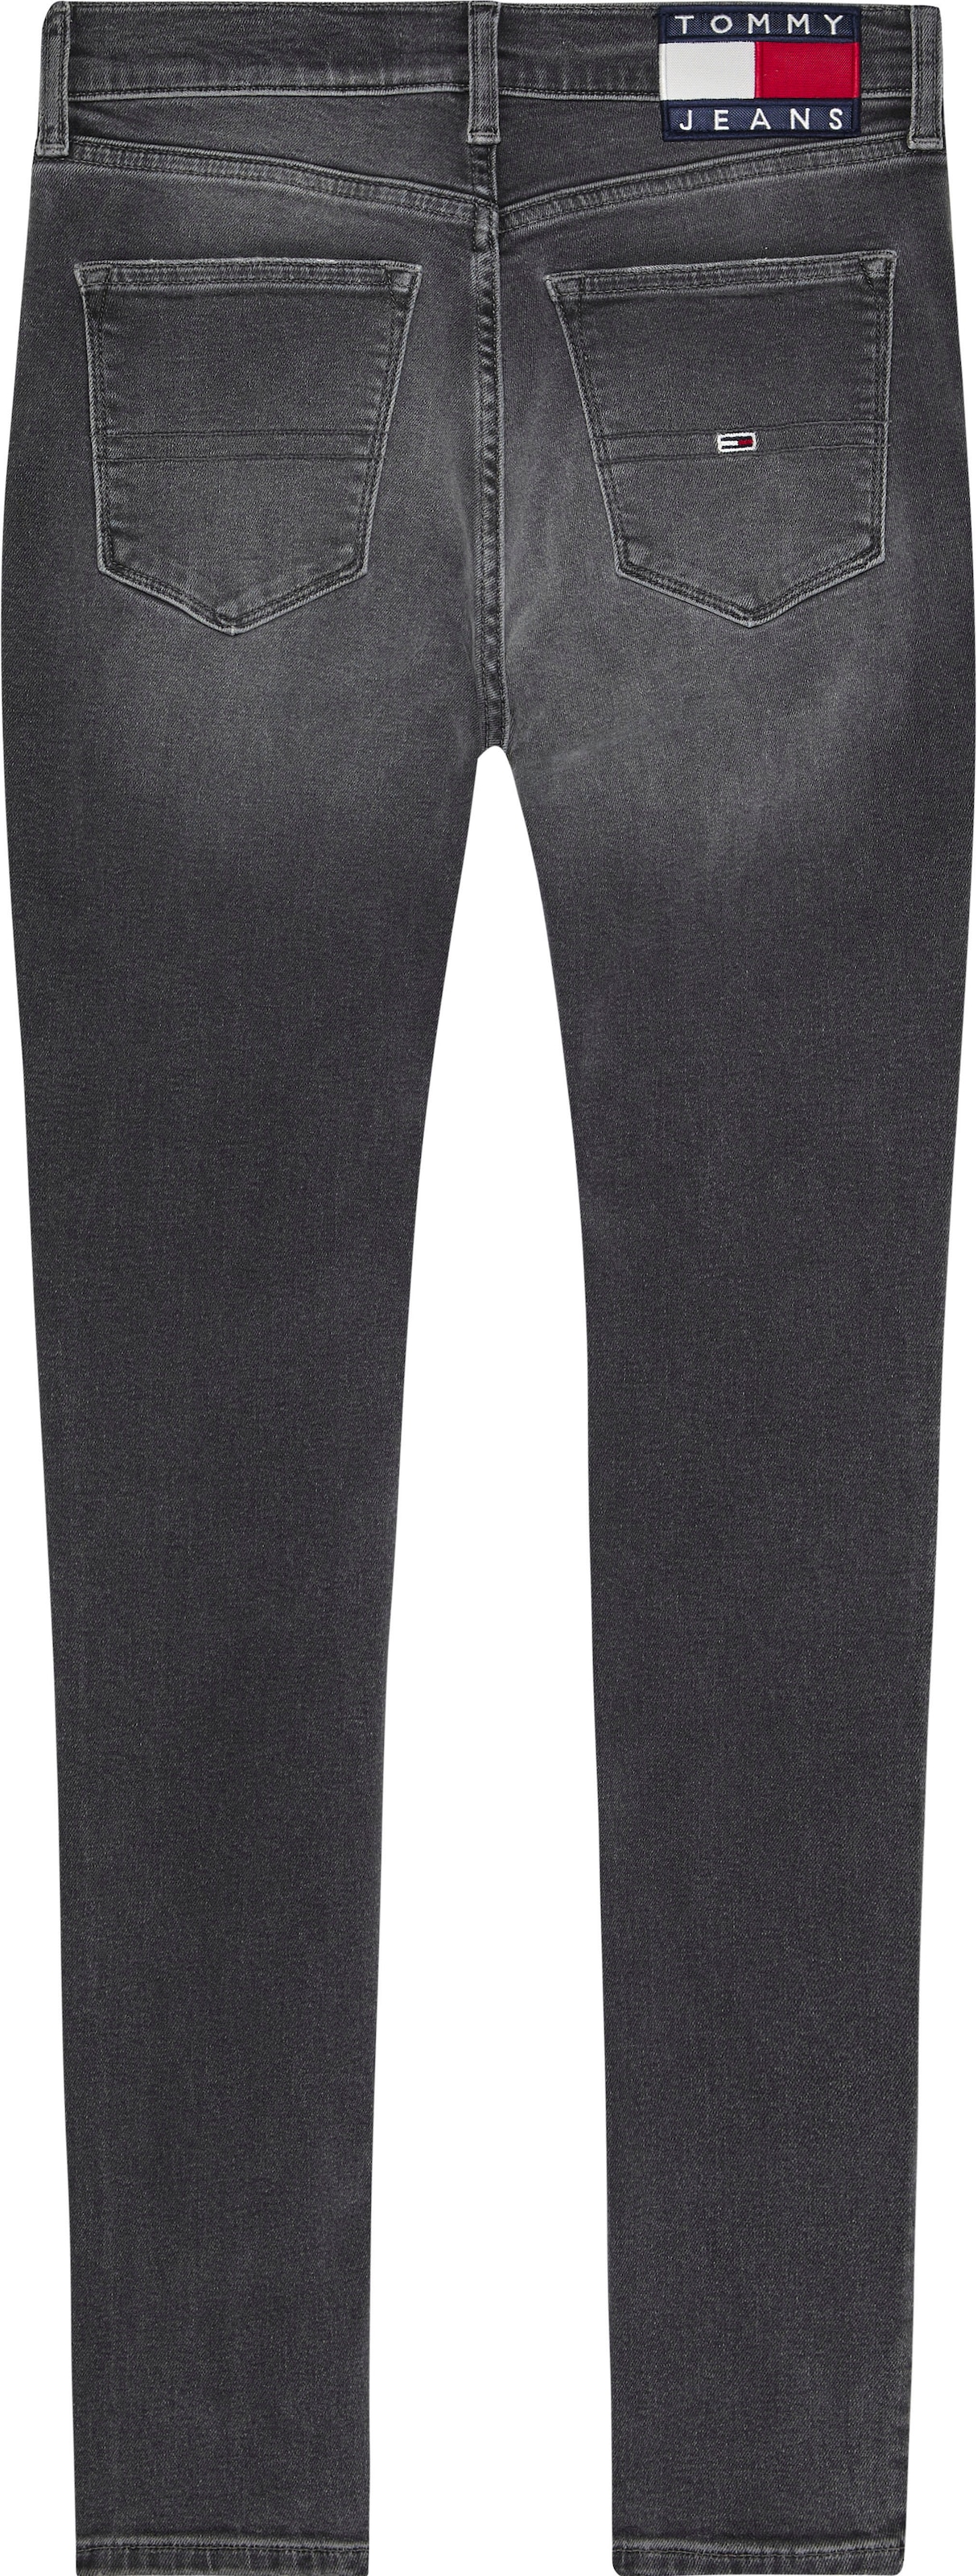 Jeans OTTOversand & Jeans SKINNY PVS mit Skinny-fit-Jeans Logo-Flag bei gestickter Tommy Tommy »NORA MR BG2235«, Destroyed-Effekten